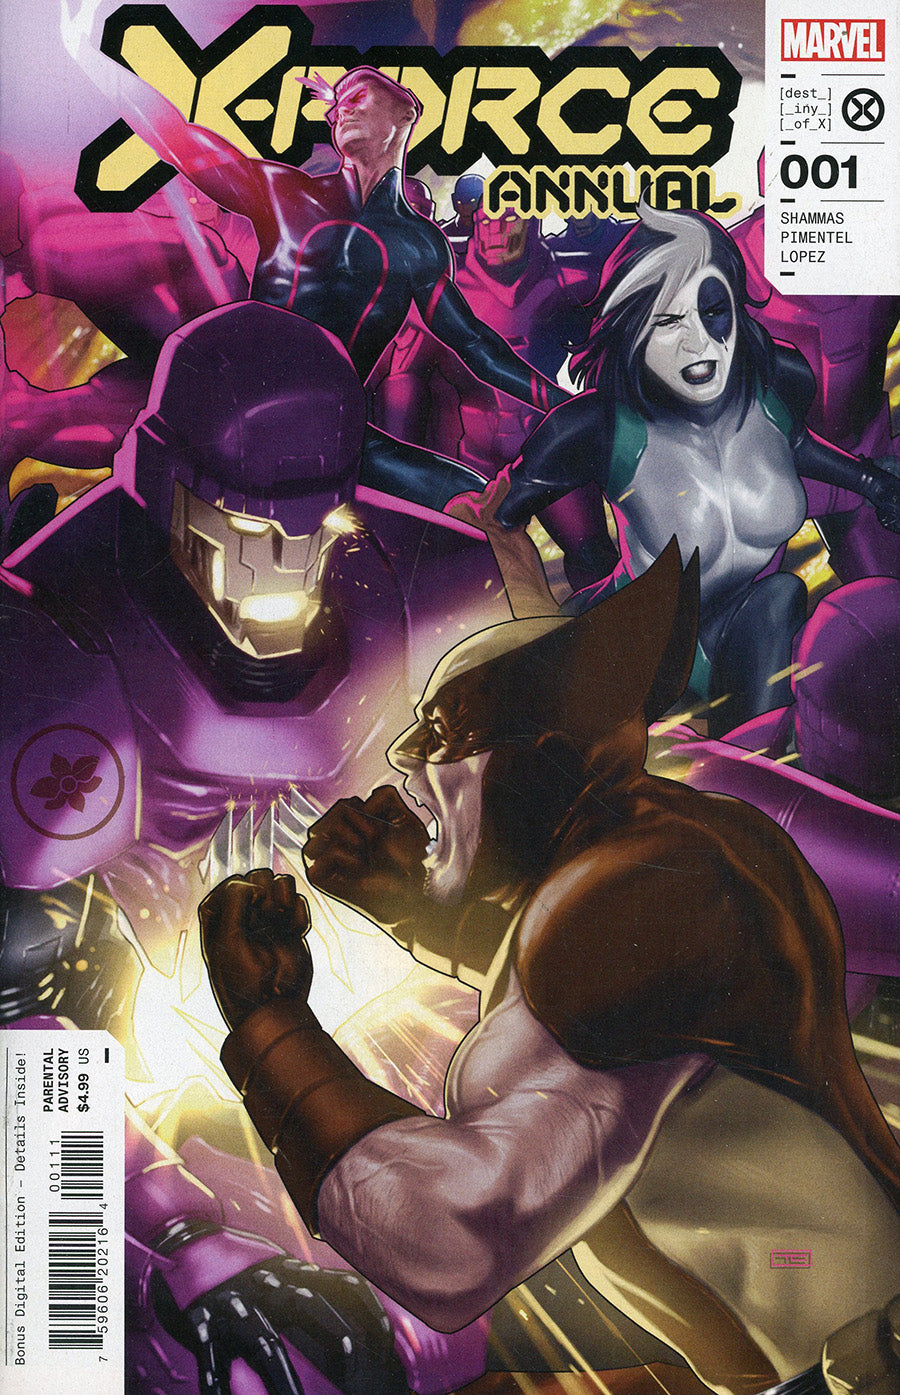 Marvel Comics - X-Force Vol 6 Annual #1